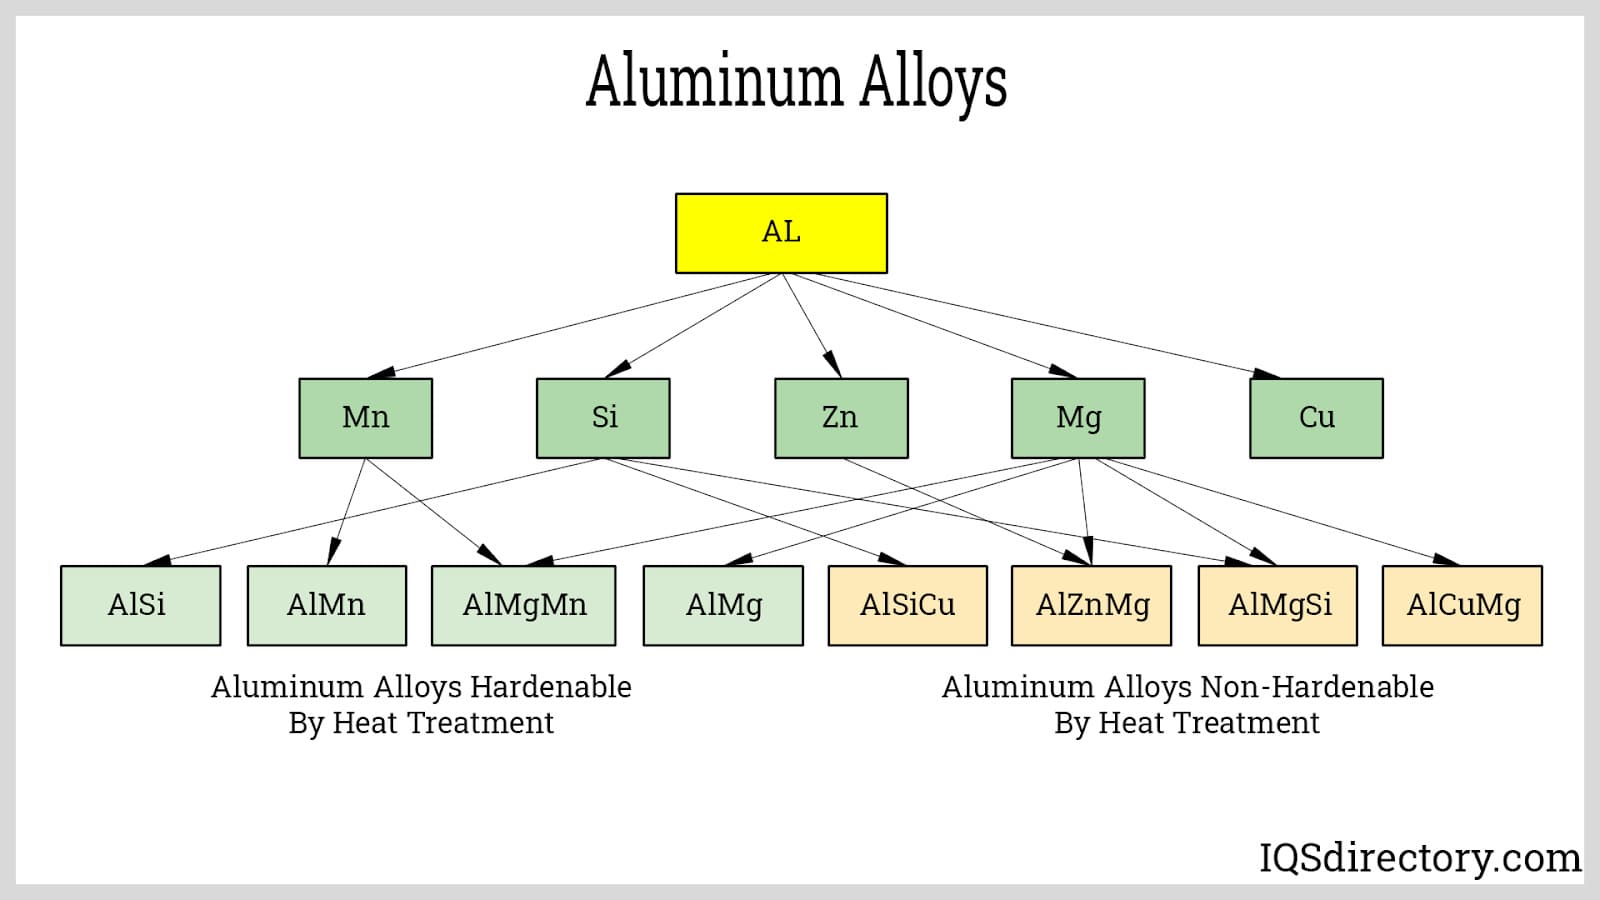 Aluminum Alloys